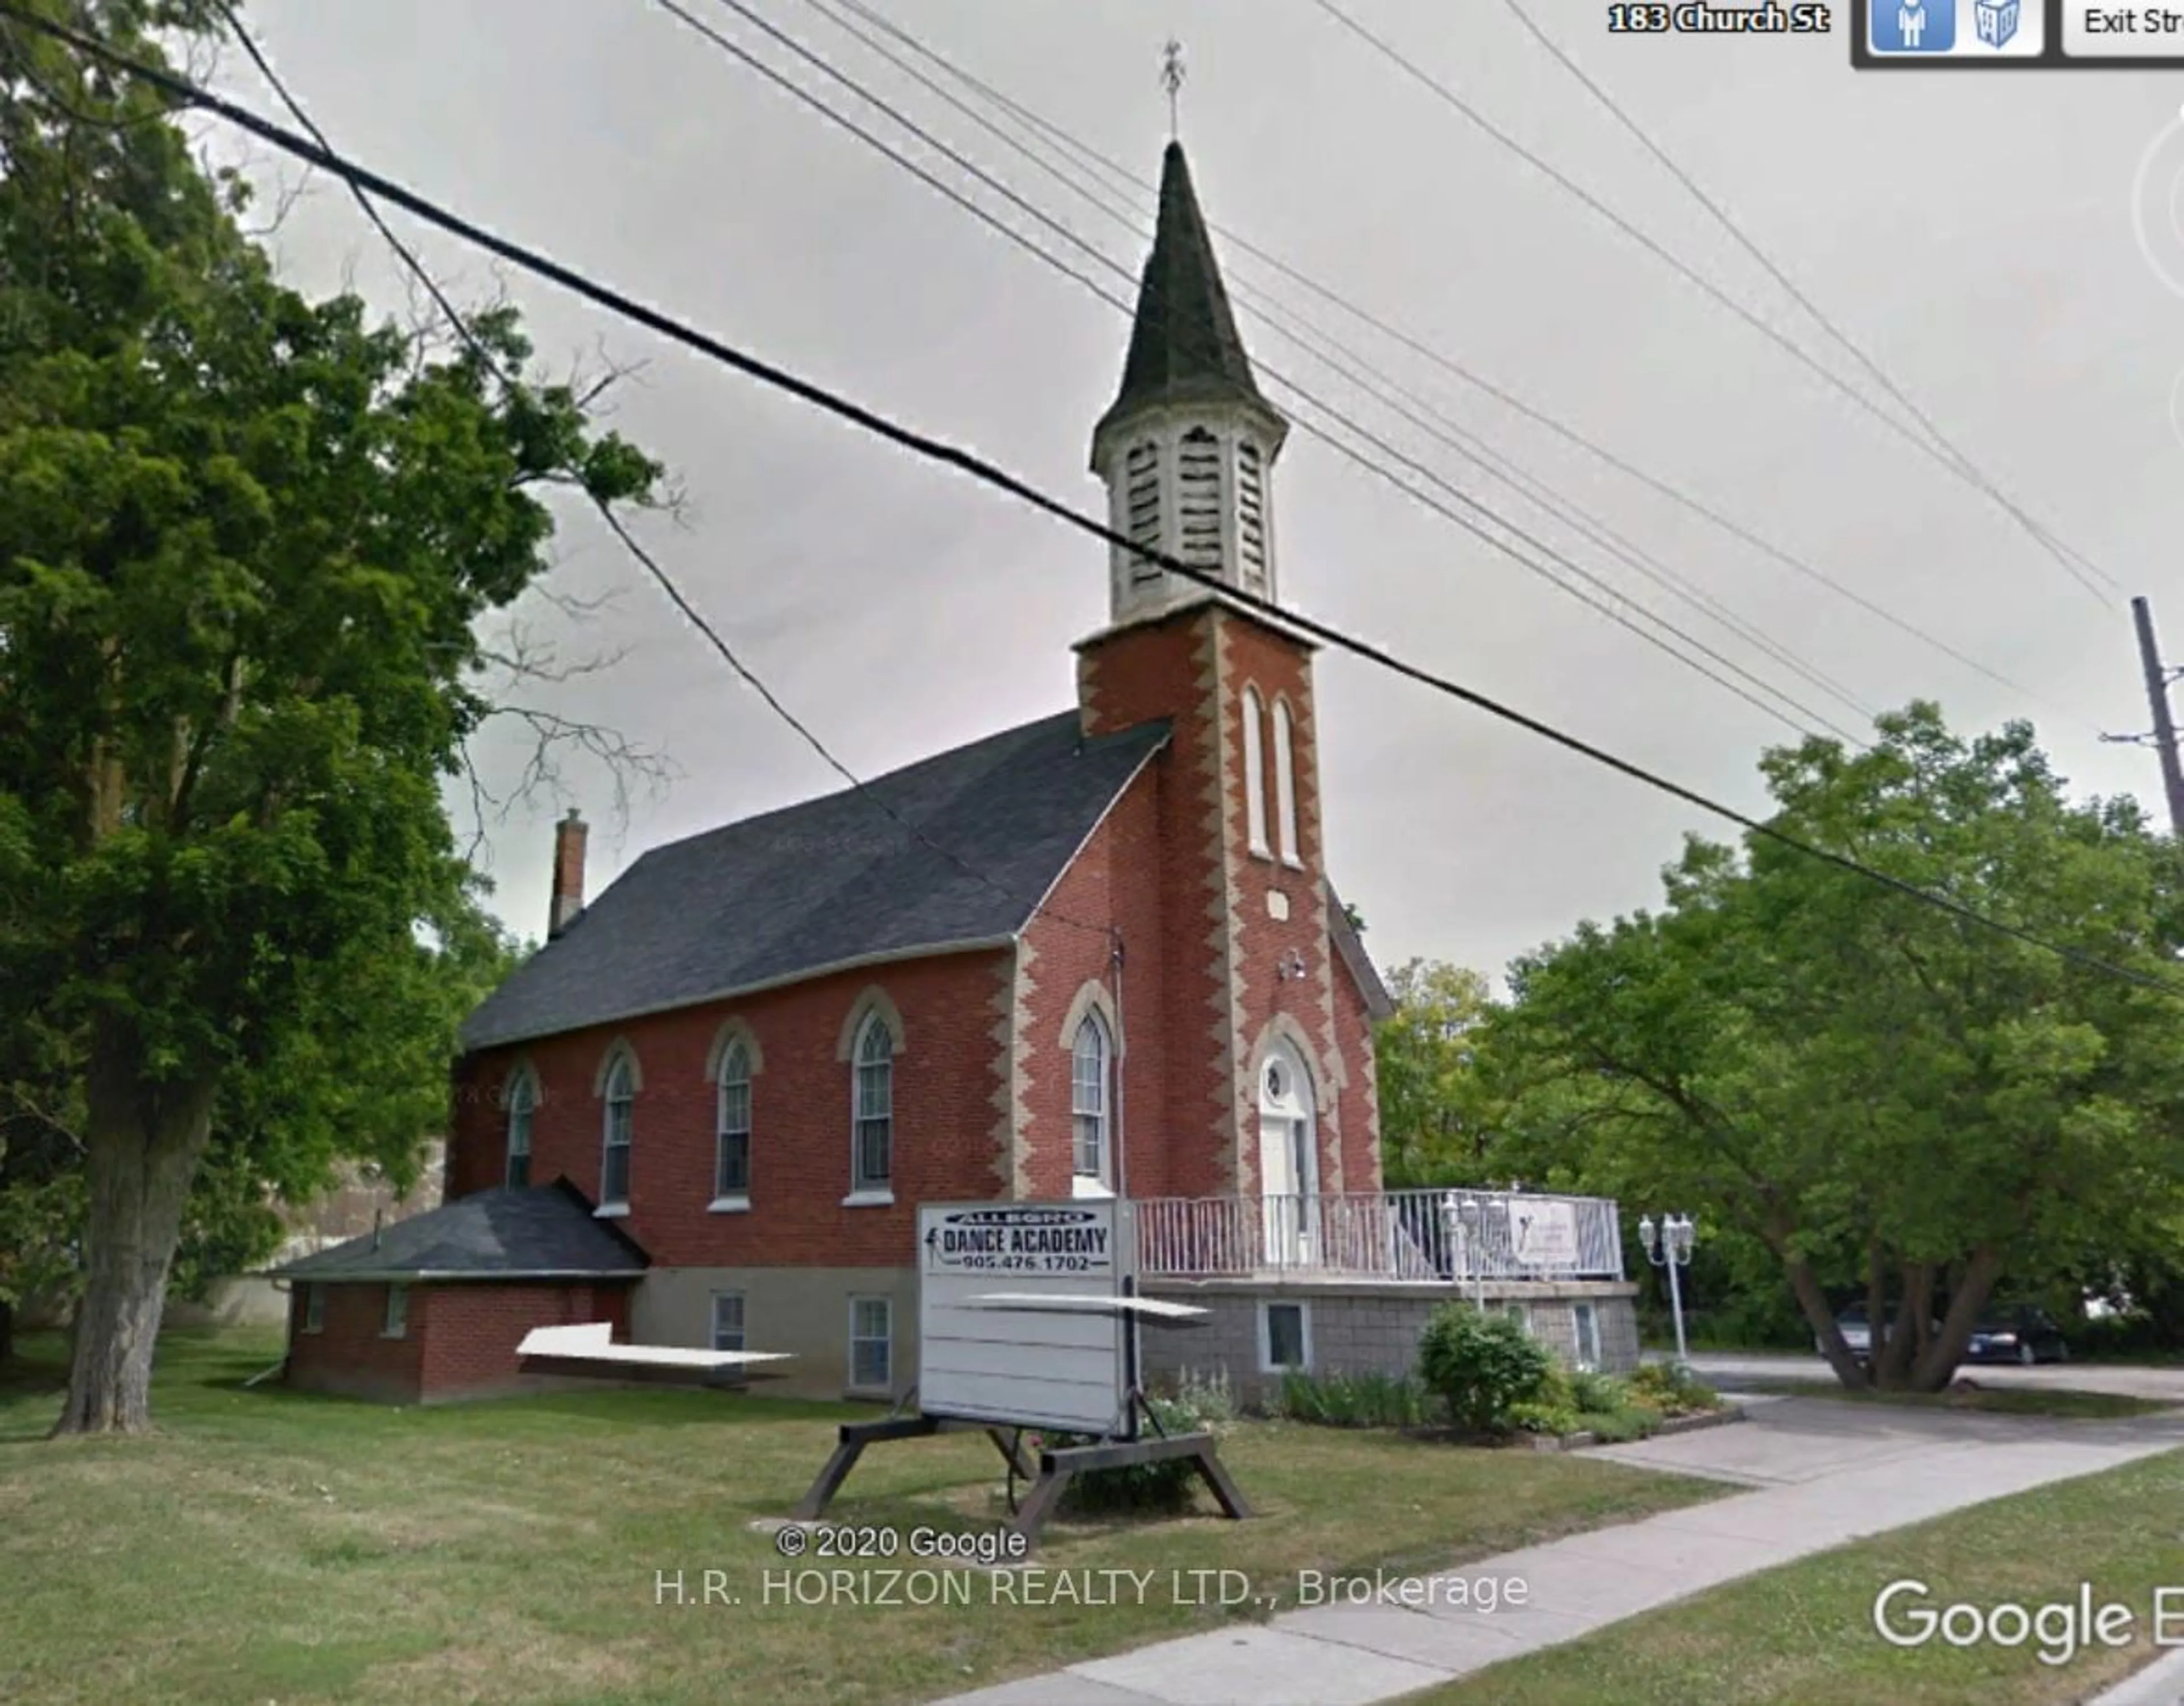 Street view for 180 Church St, Georgina Ontario L4P 1J5